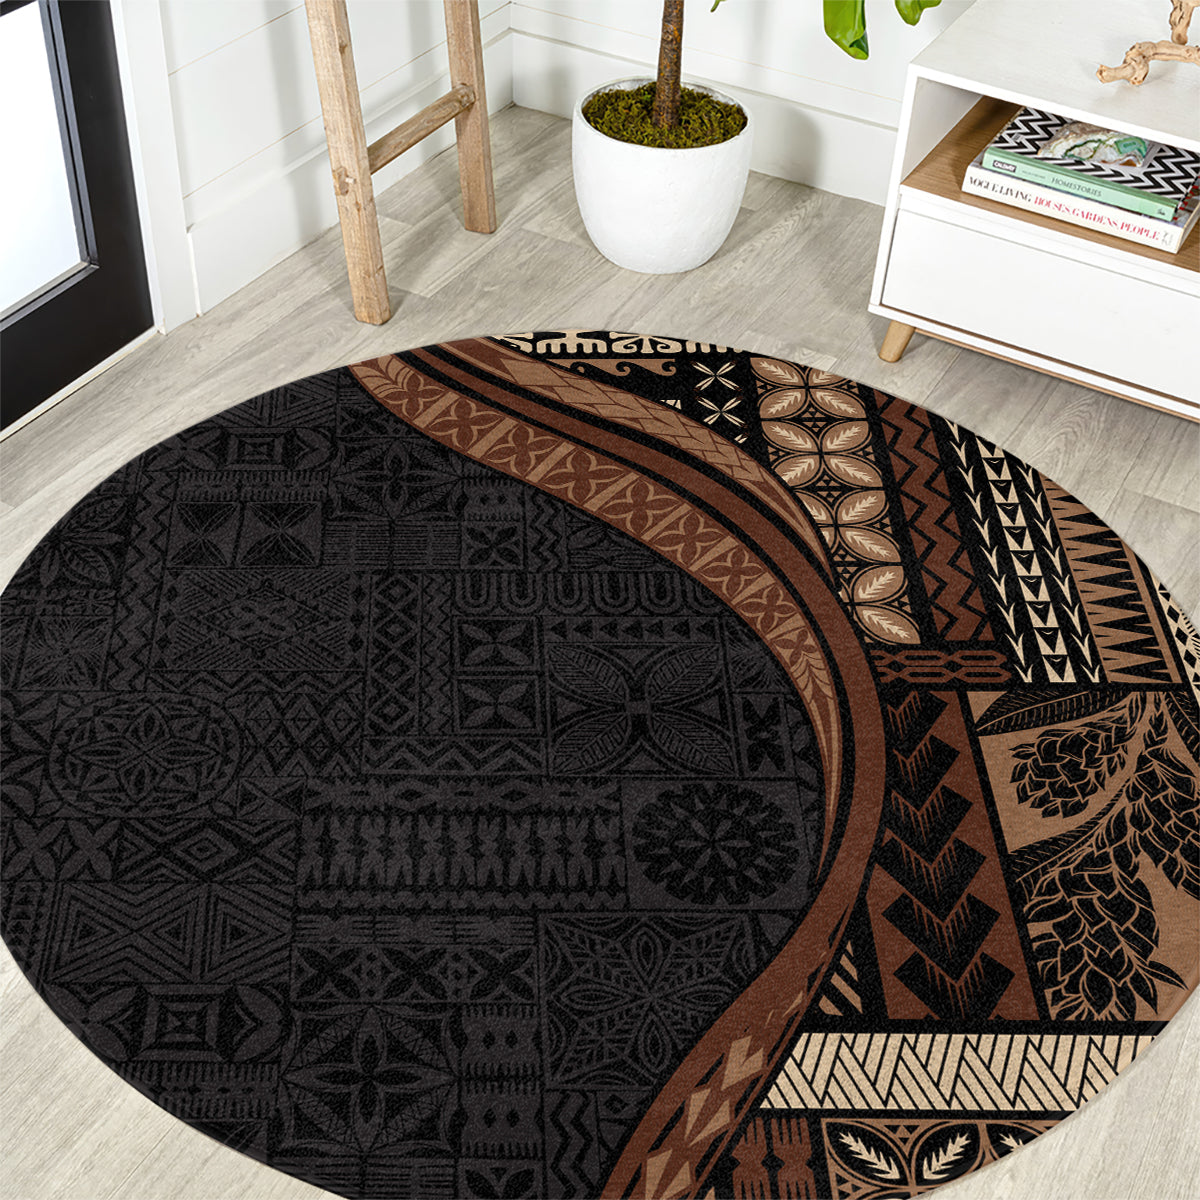 Samoa Siapo Motif and Tapa Pattern Half Style Round Carpet Black Color